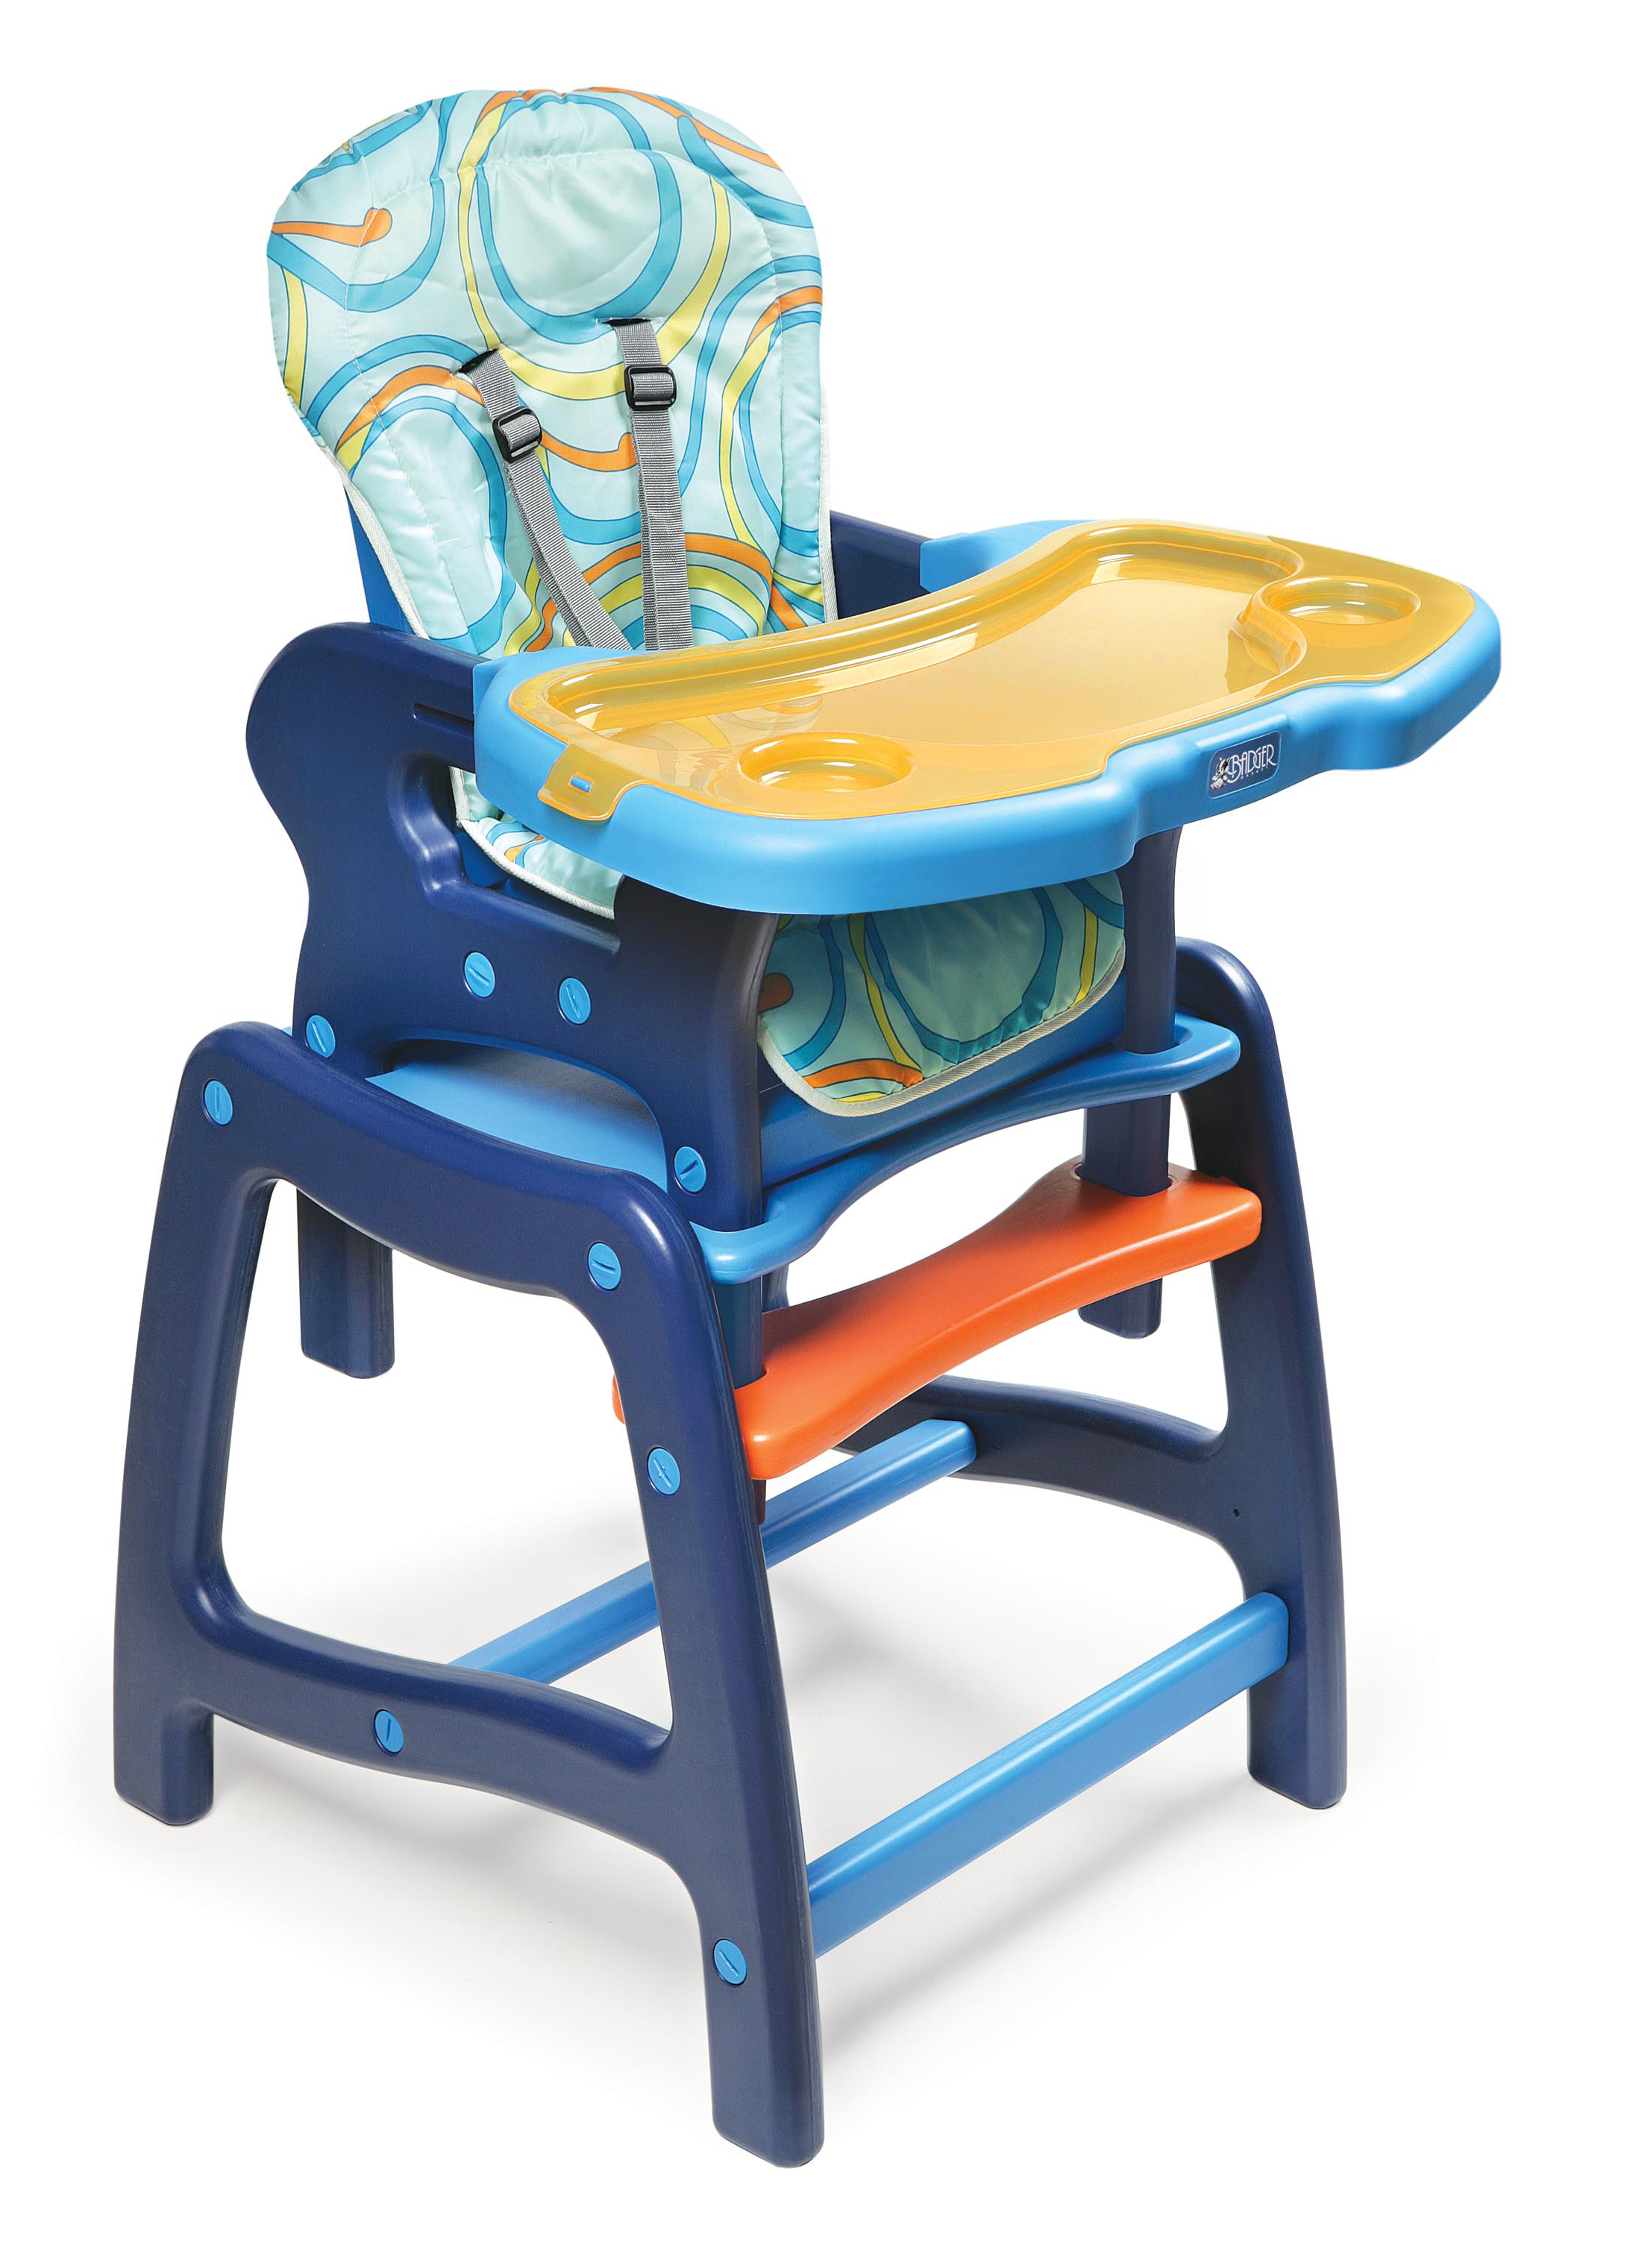 Envee Baby High Chair with Playtable Conversion - Blue/Orange